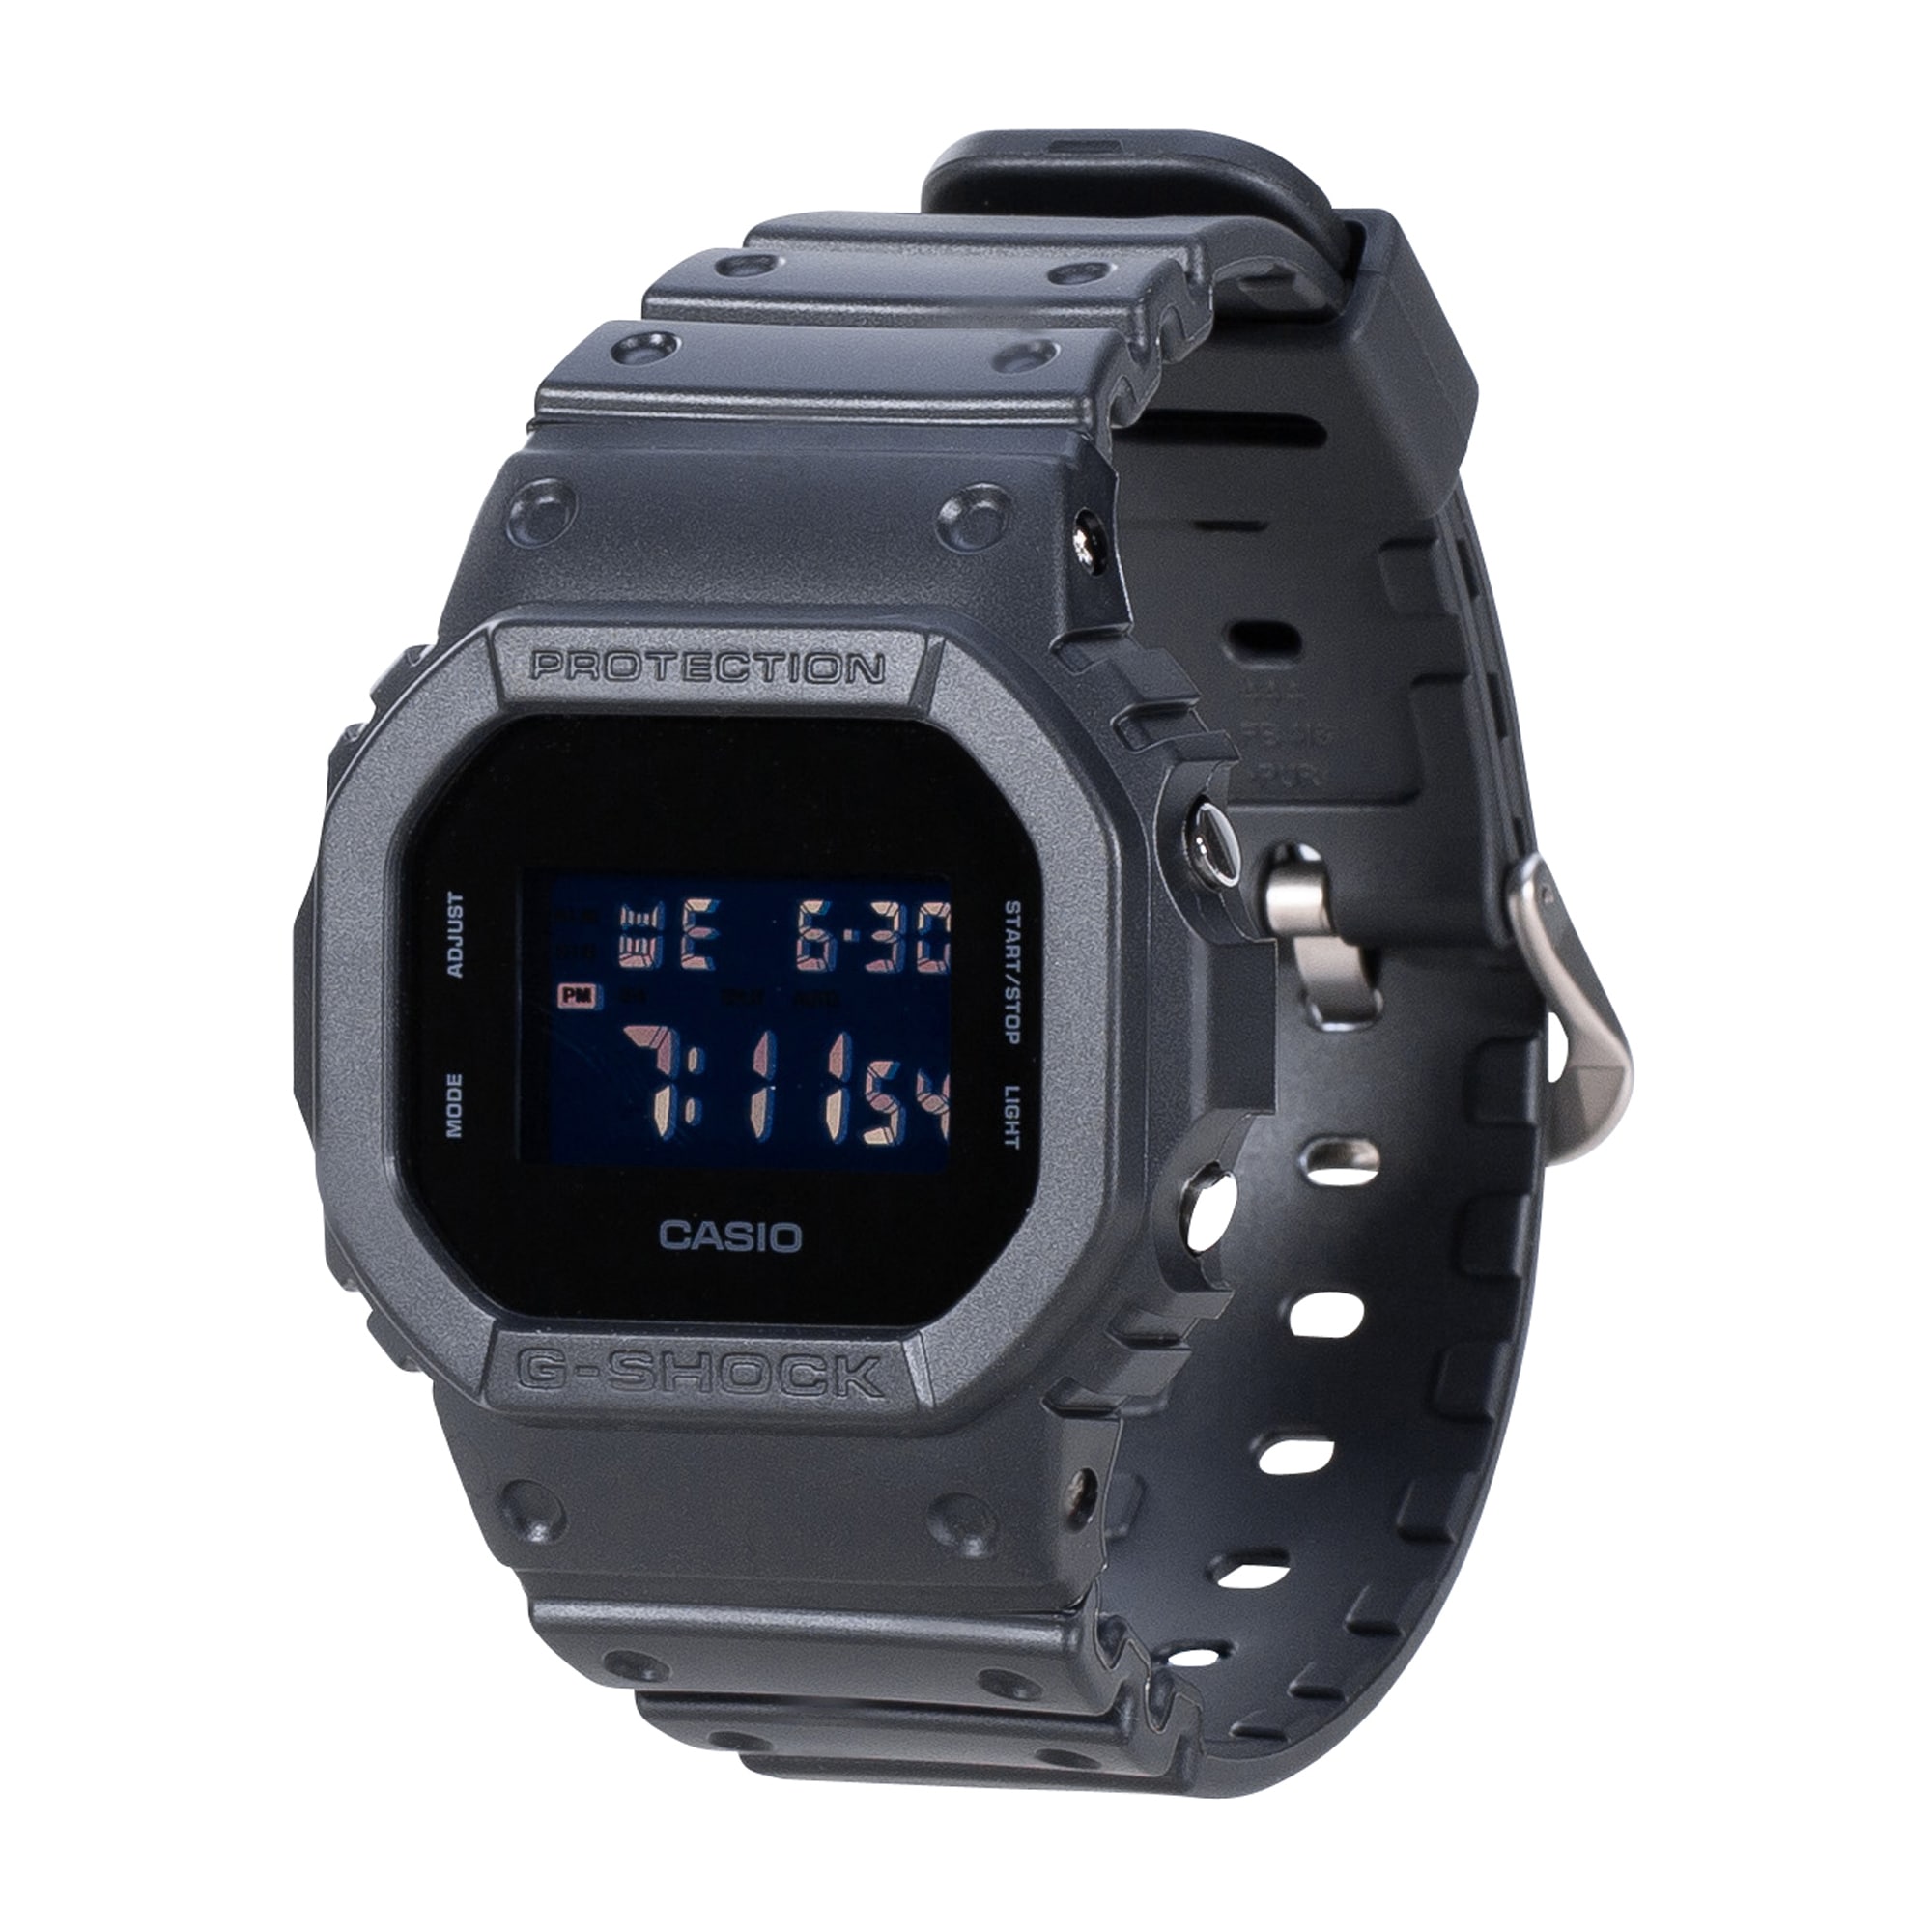 Afsky Bemyndigelse grus Purchase the Casio Watch G-Shock The Origin DW-5600BB-1ER black